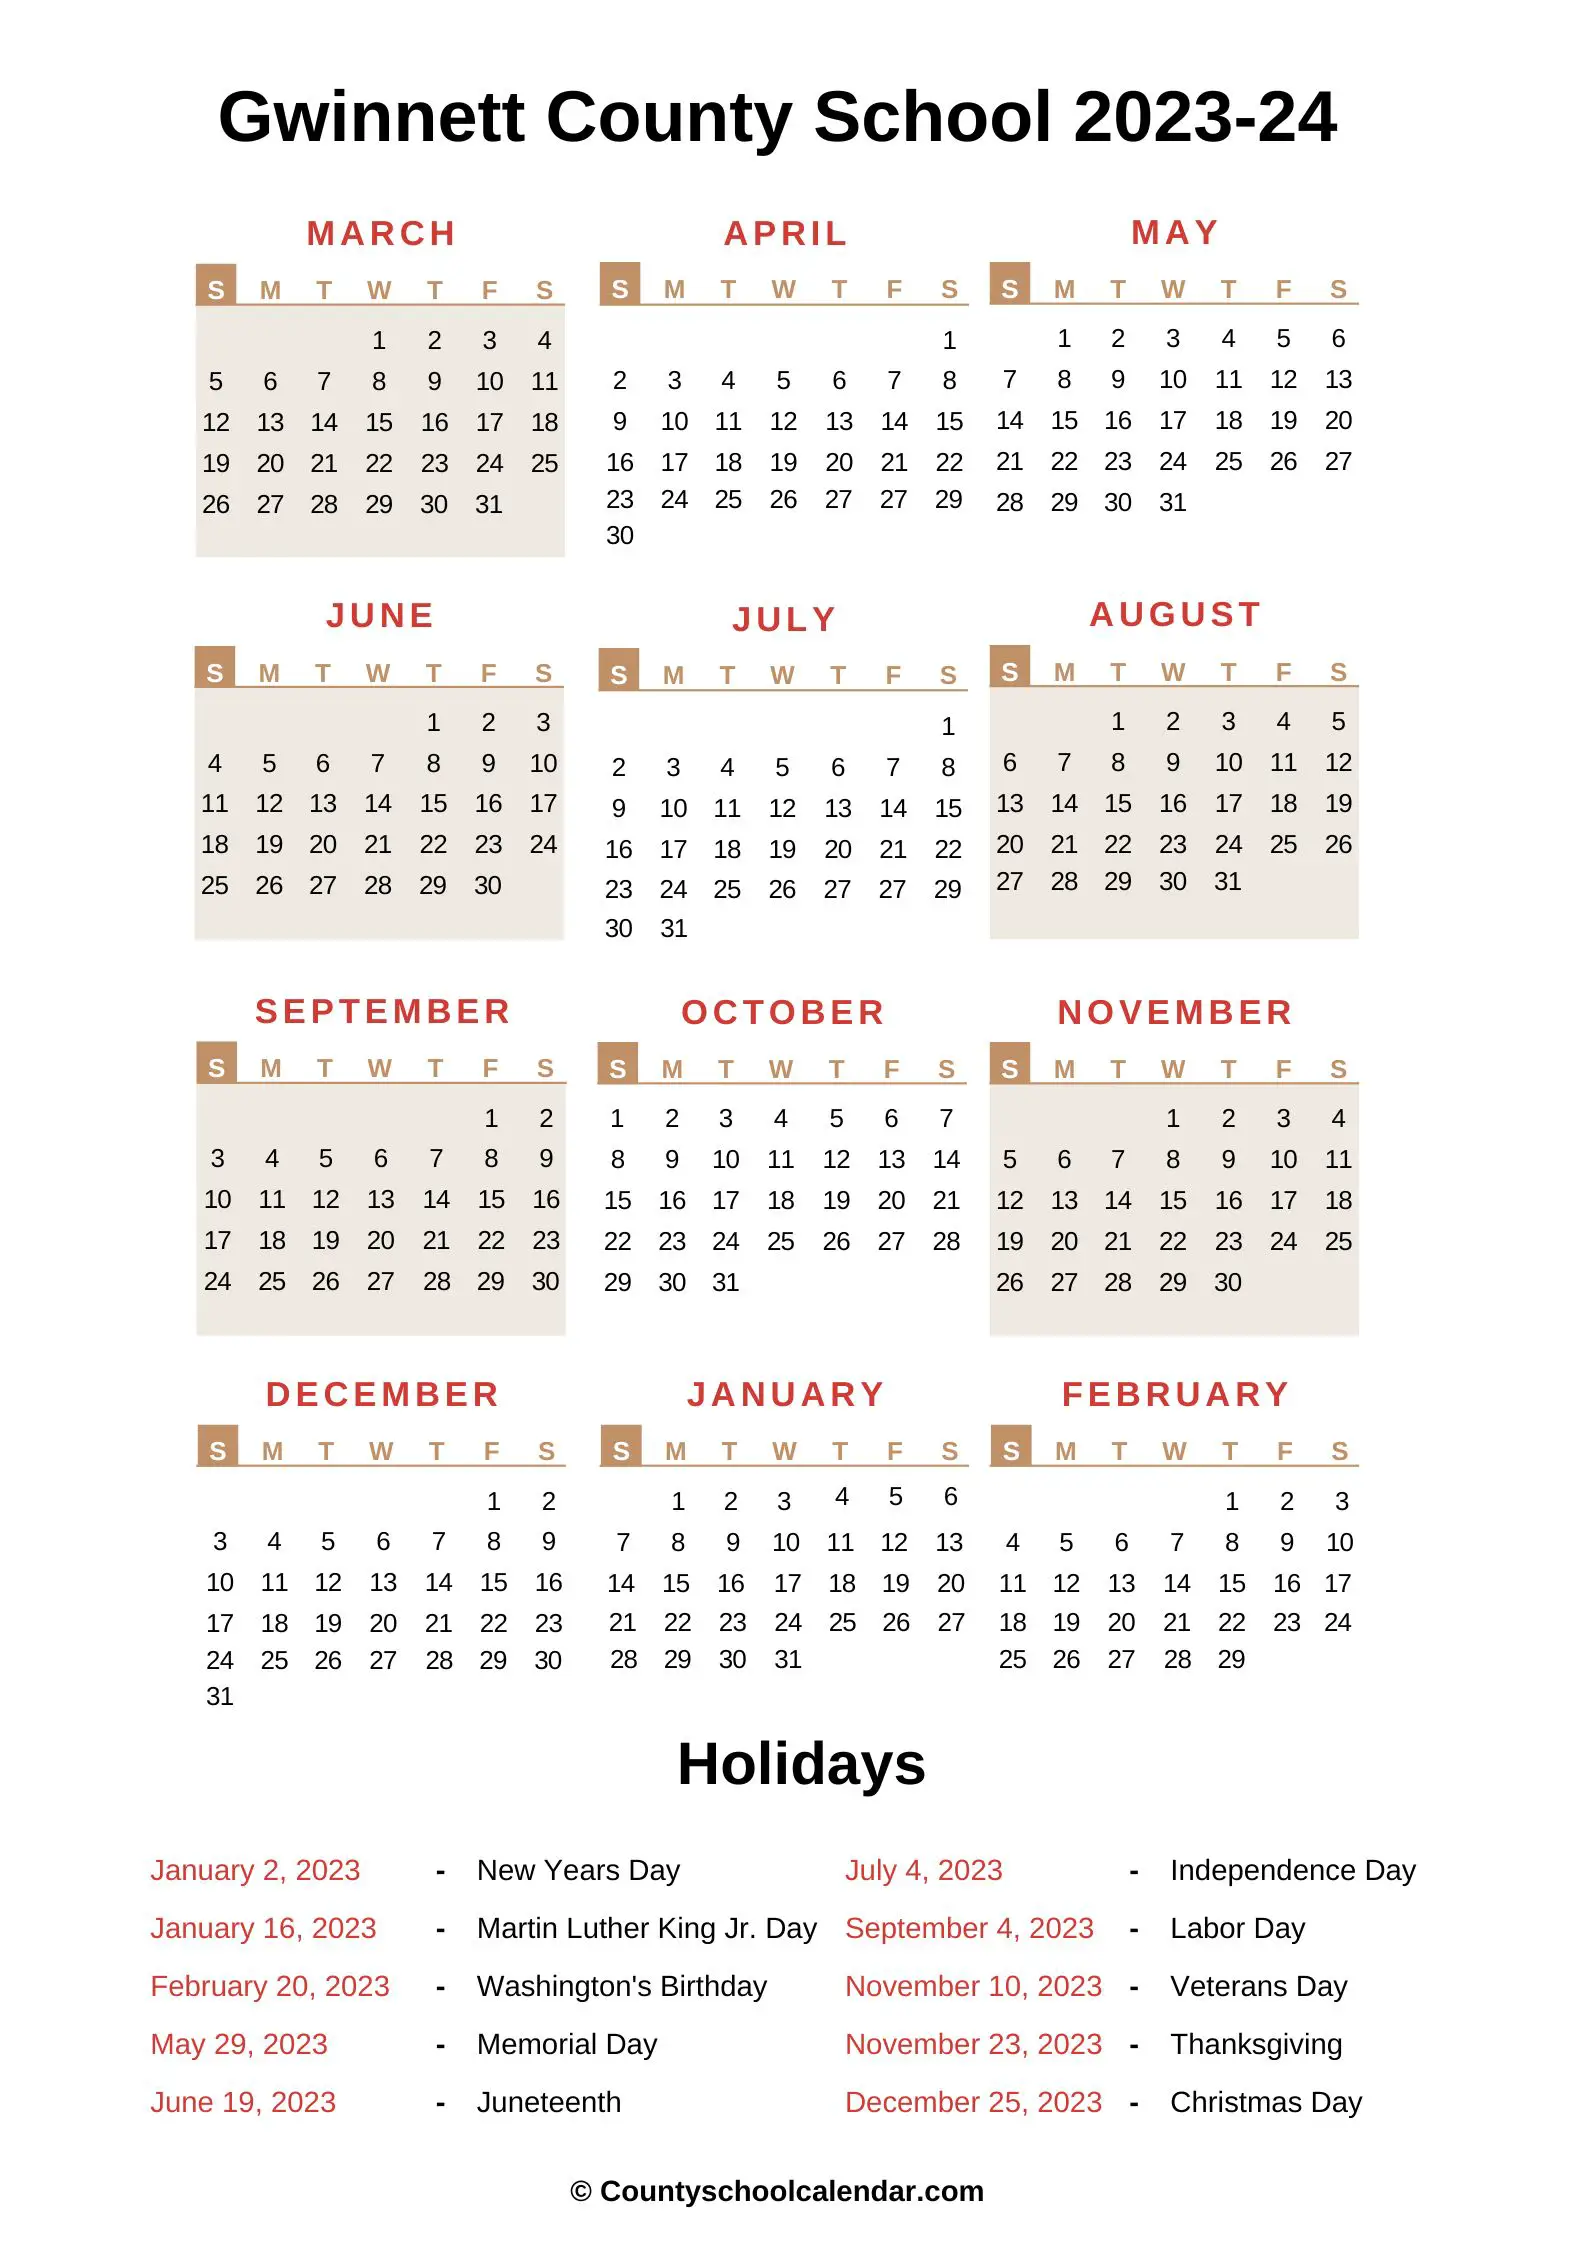 gwinnett-county-public-school-calendar-with-holidays-archives-county-school-calendar